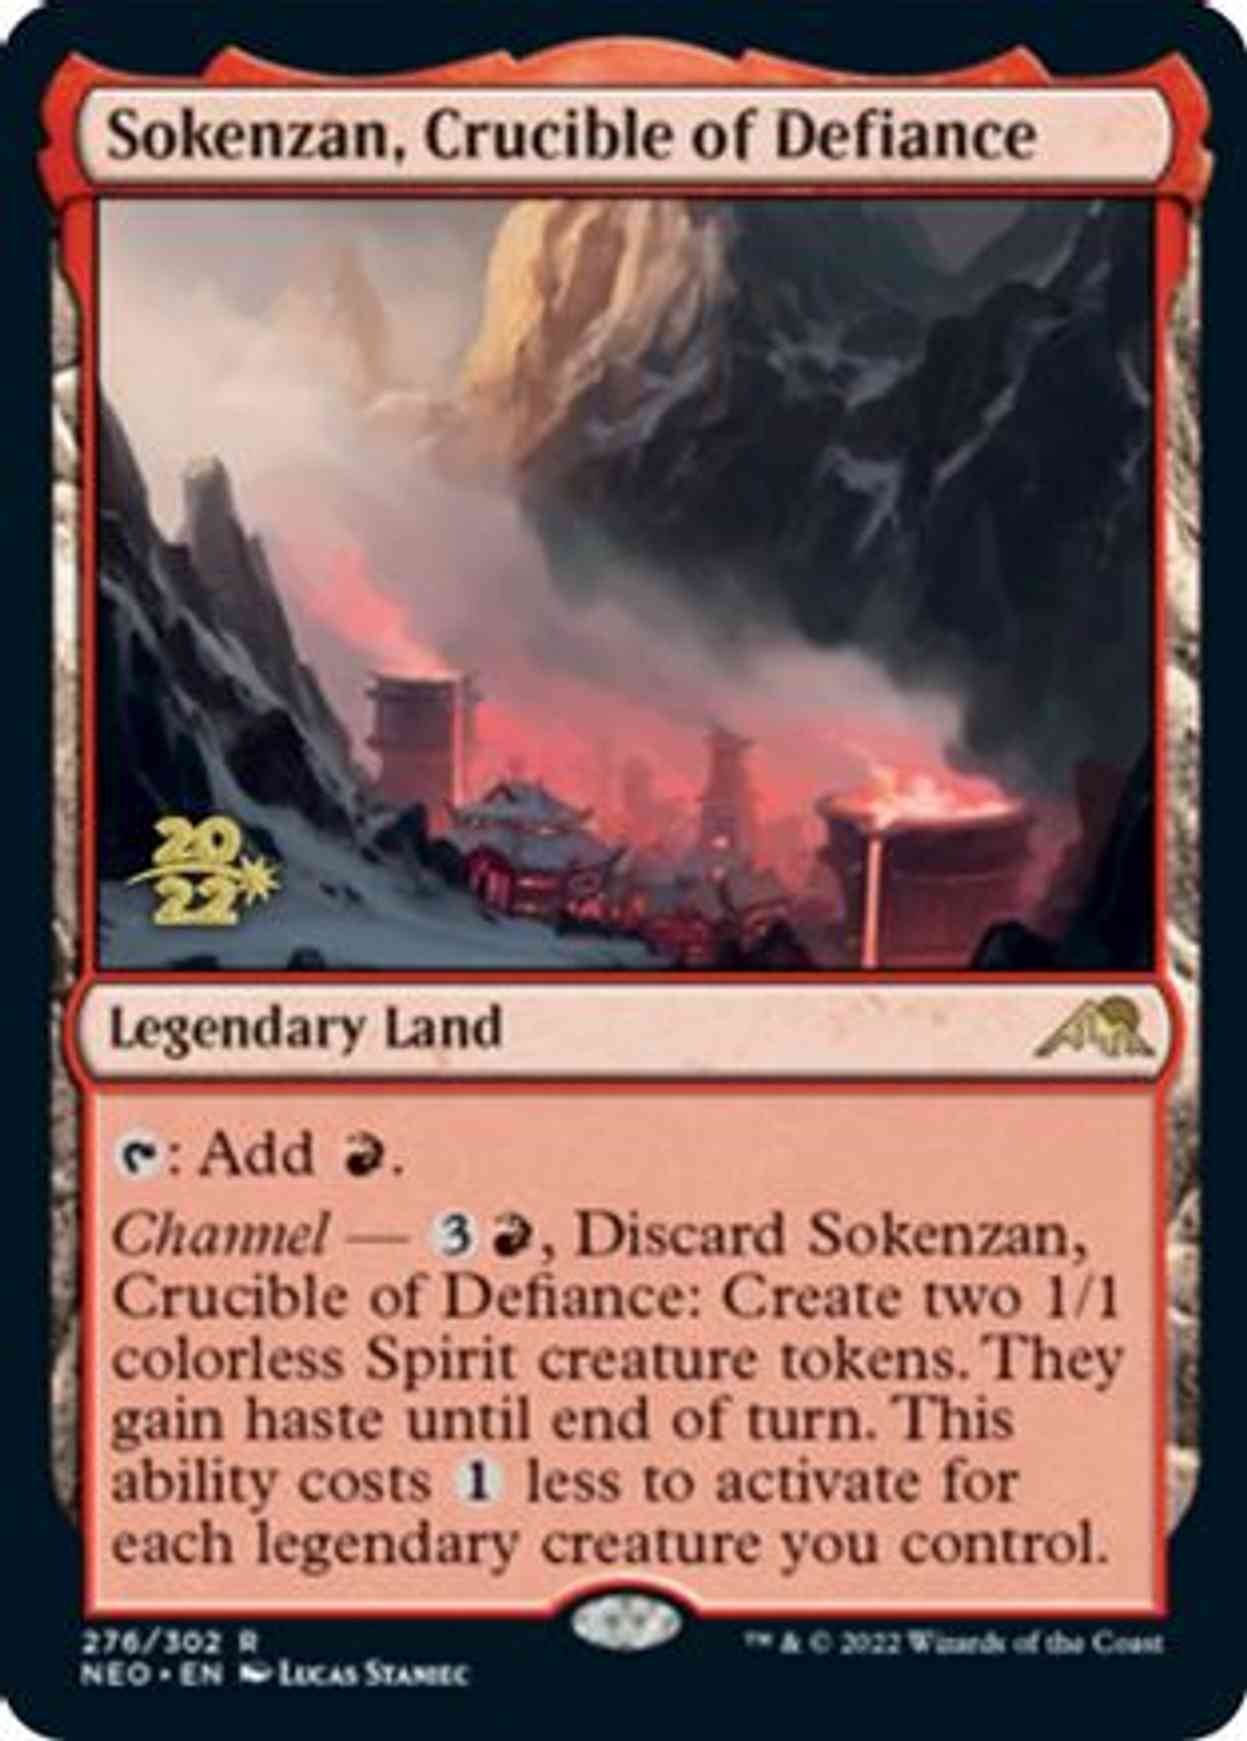 Sokenzan, Crucible of Defiance magic card front